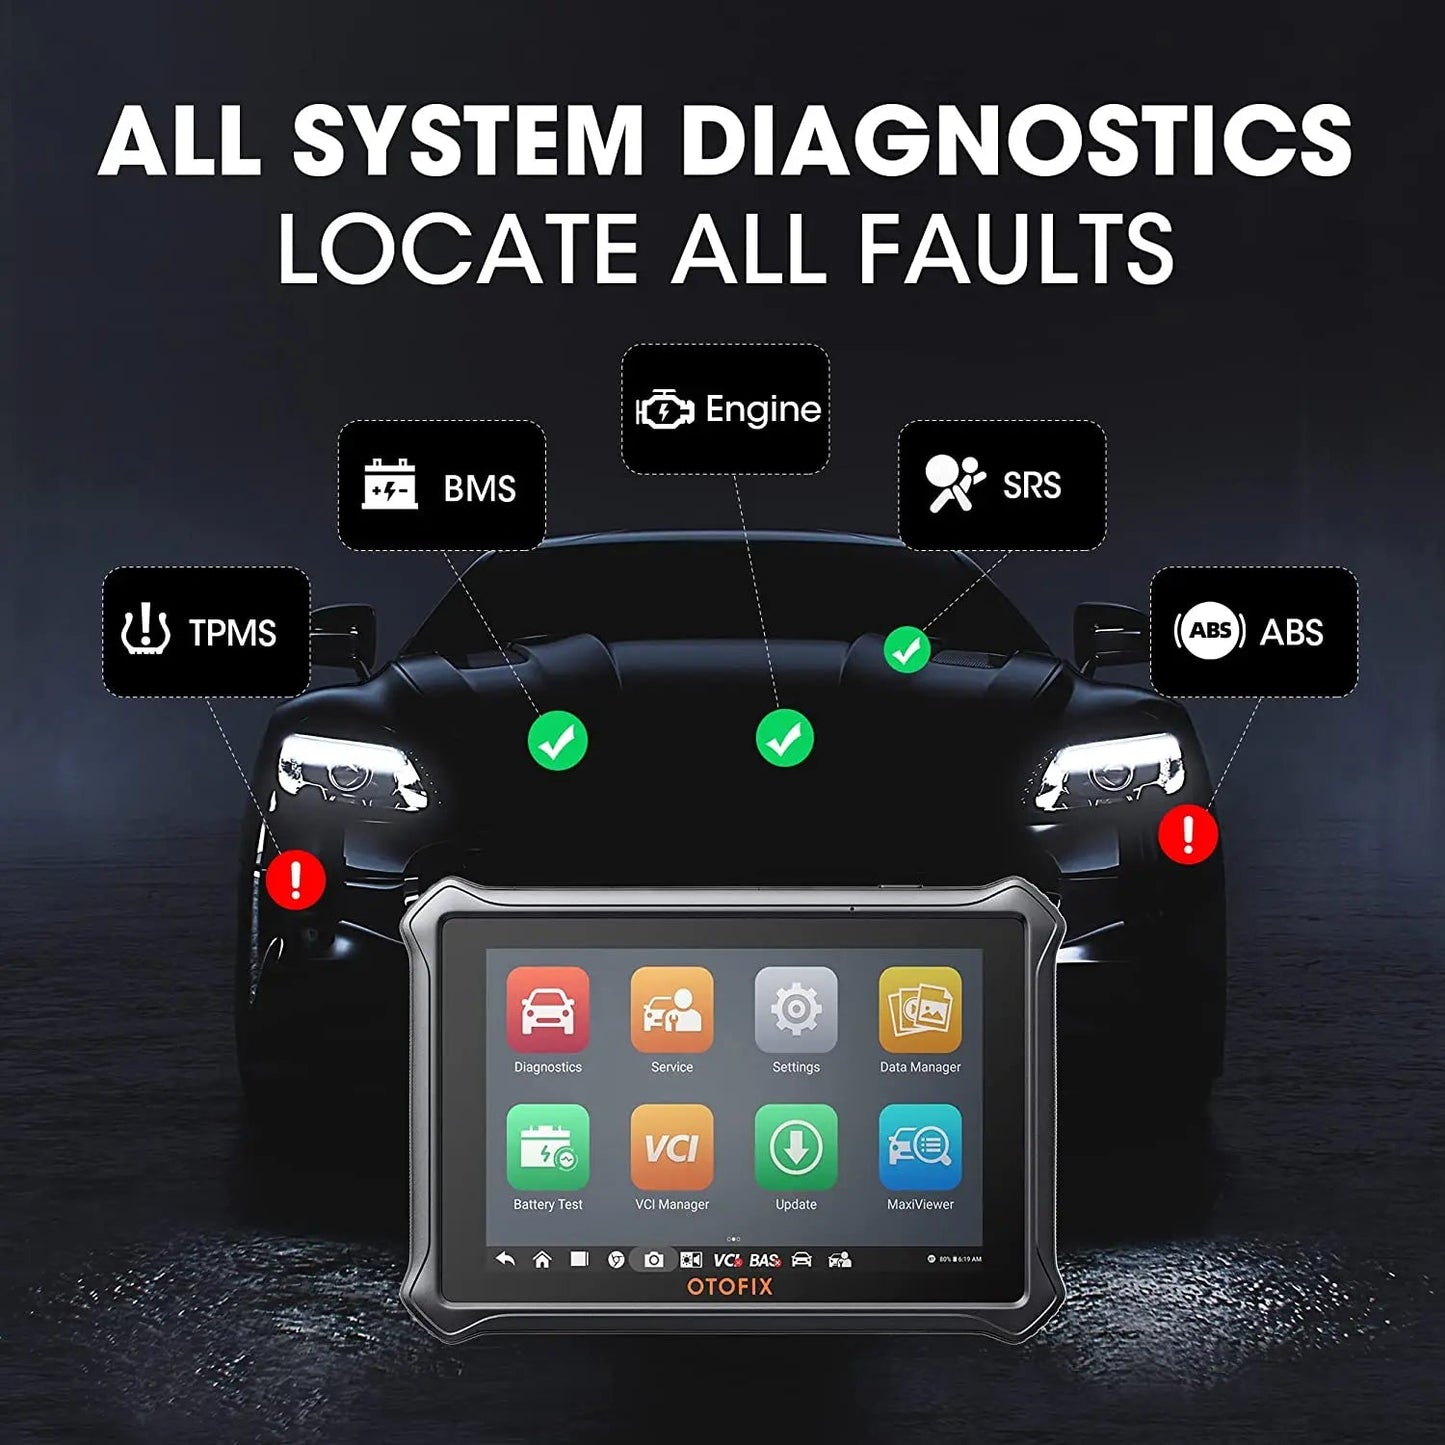 OTOFIX D1 Lite Bluetooth Diagnostic Tool OBD2 Scanner Car Code Reader DoIP CAN FD BUS Car Diagnostic Scanner 2 Years Free Update - Dynamex